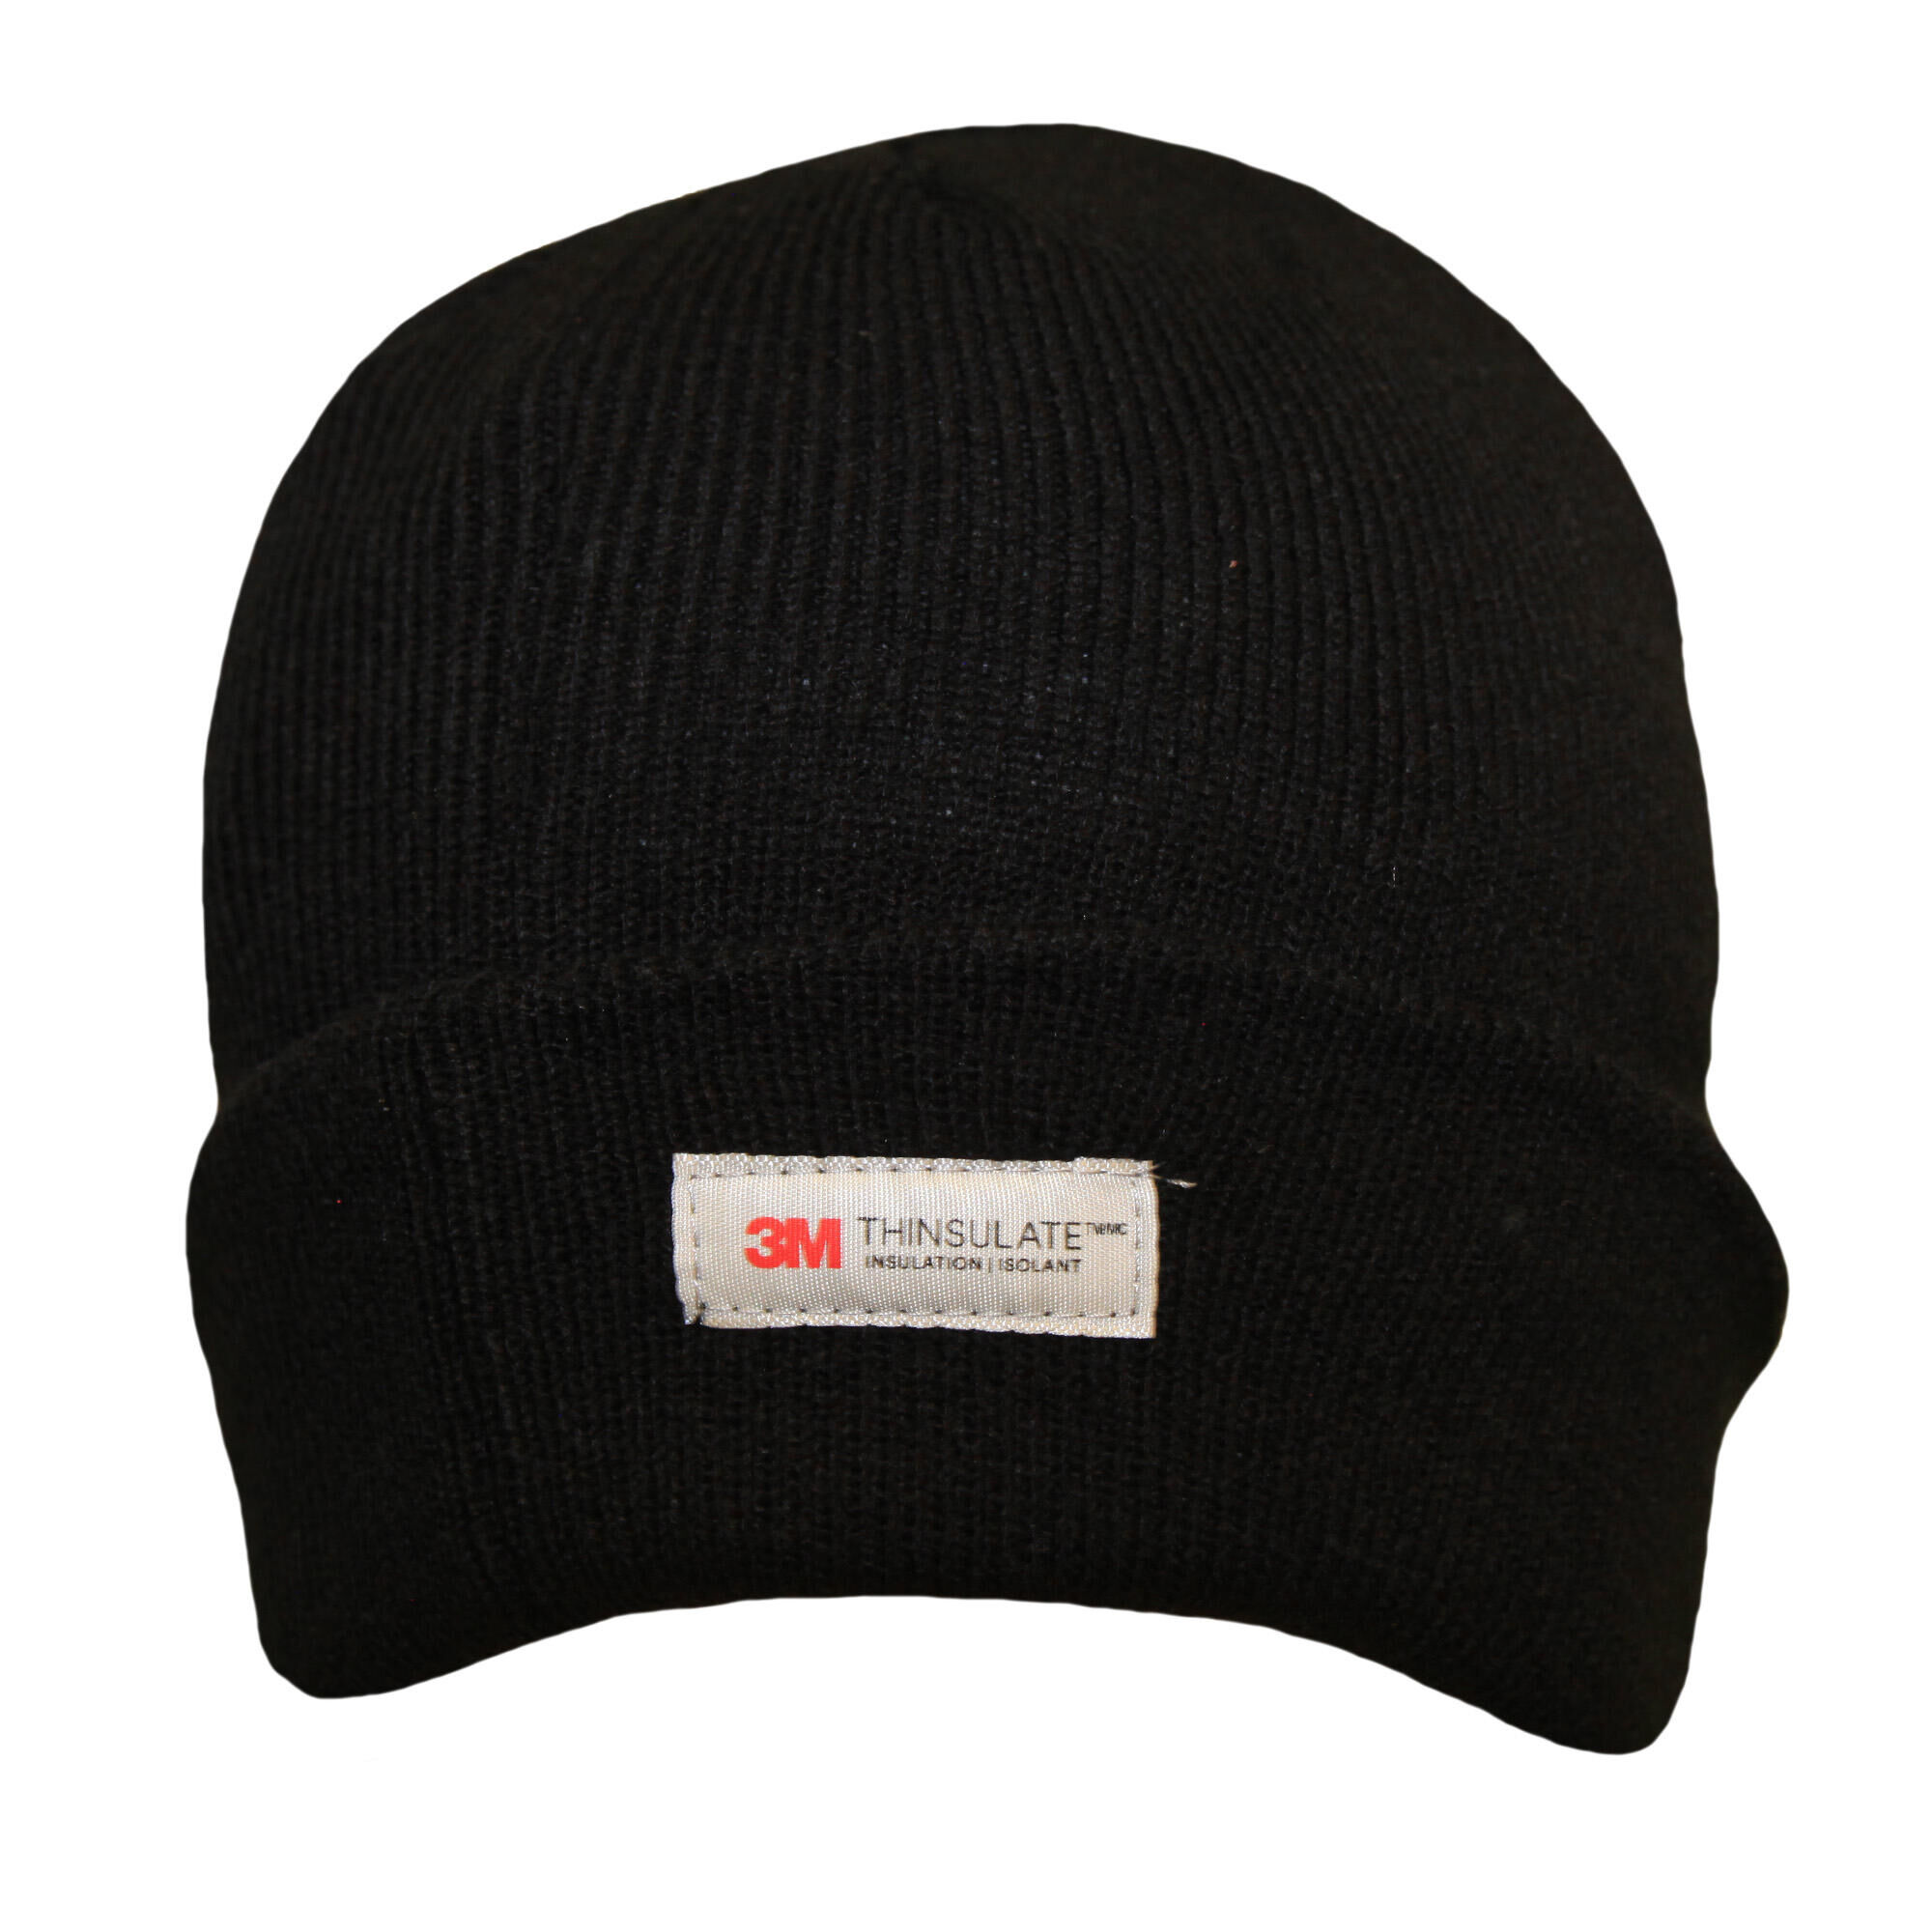 REGATTA Mens Thinsulate Thermal Winter Hat (Black)